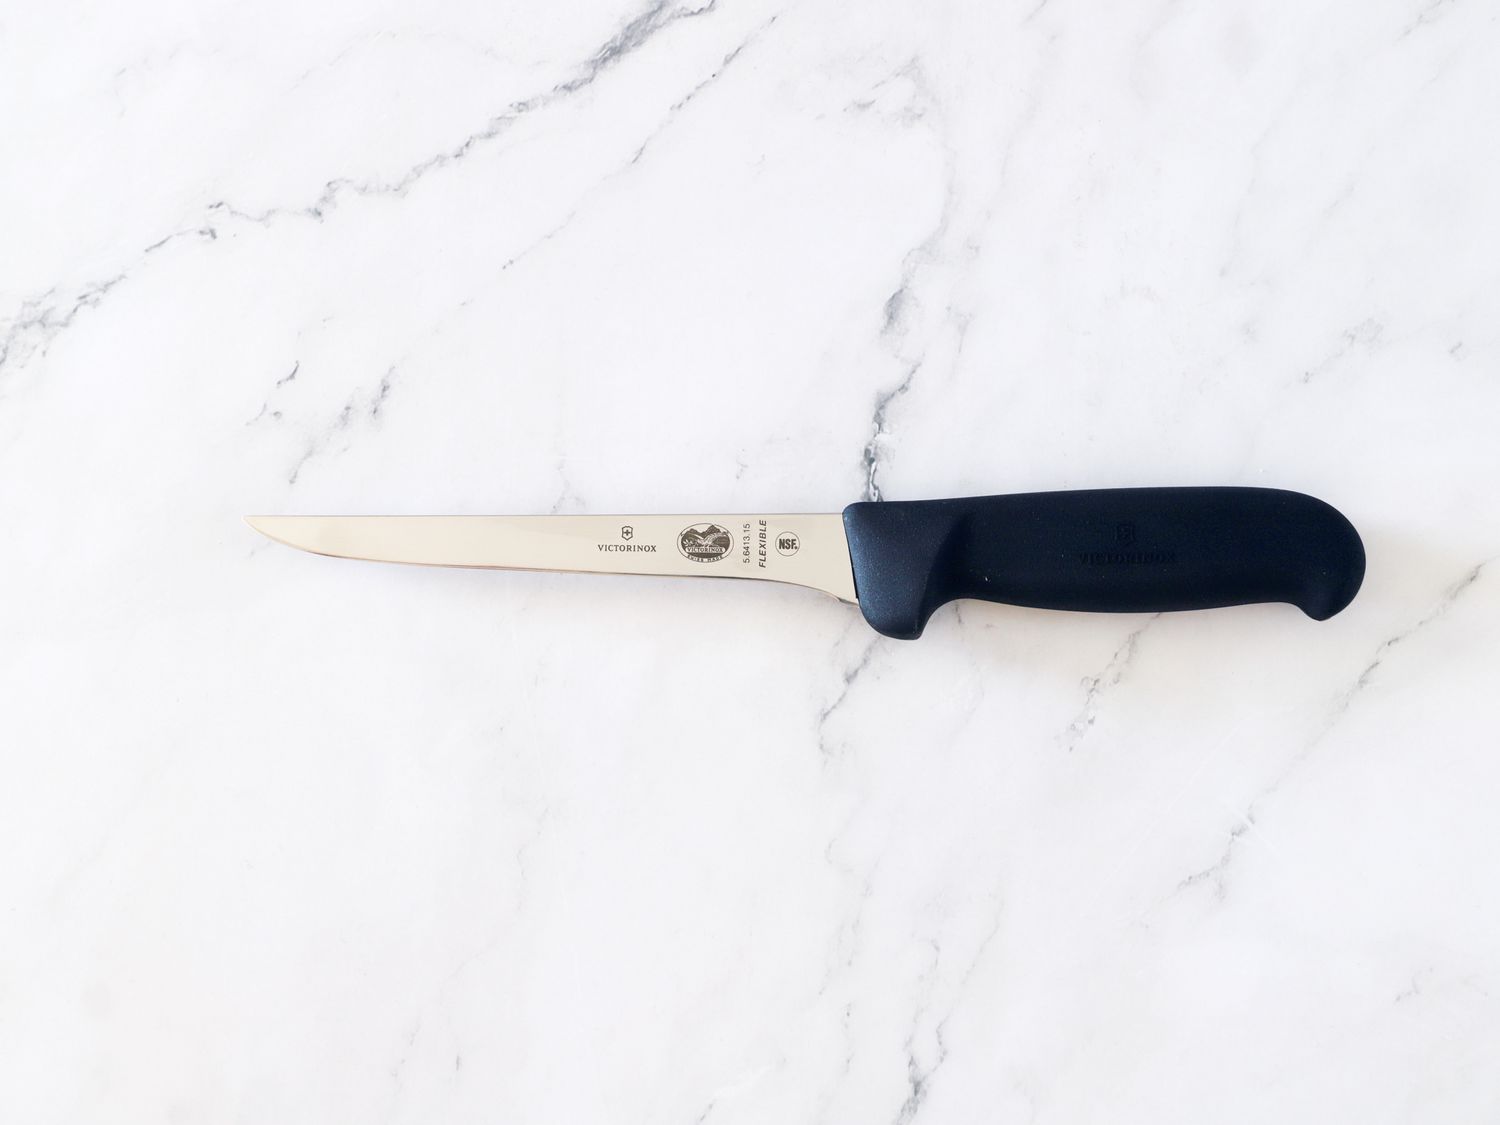 Victorinox boning knife on marble countertop